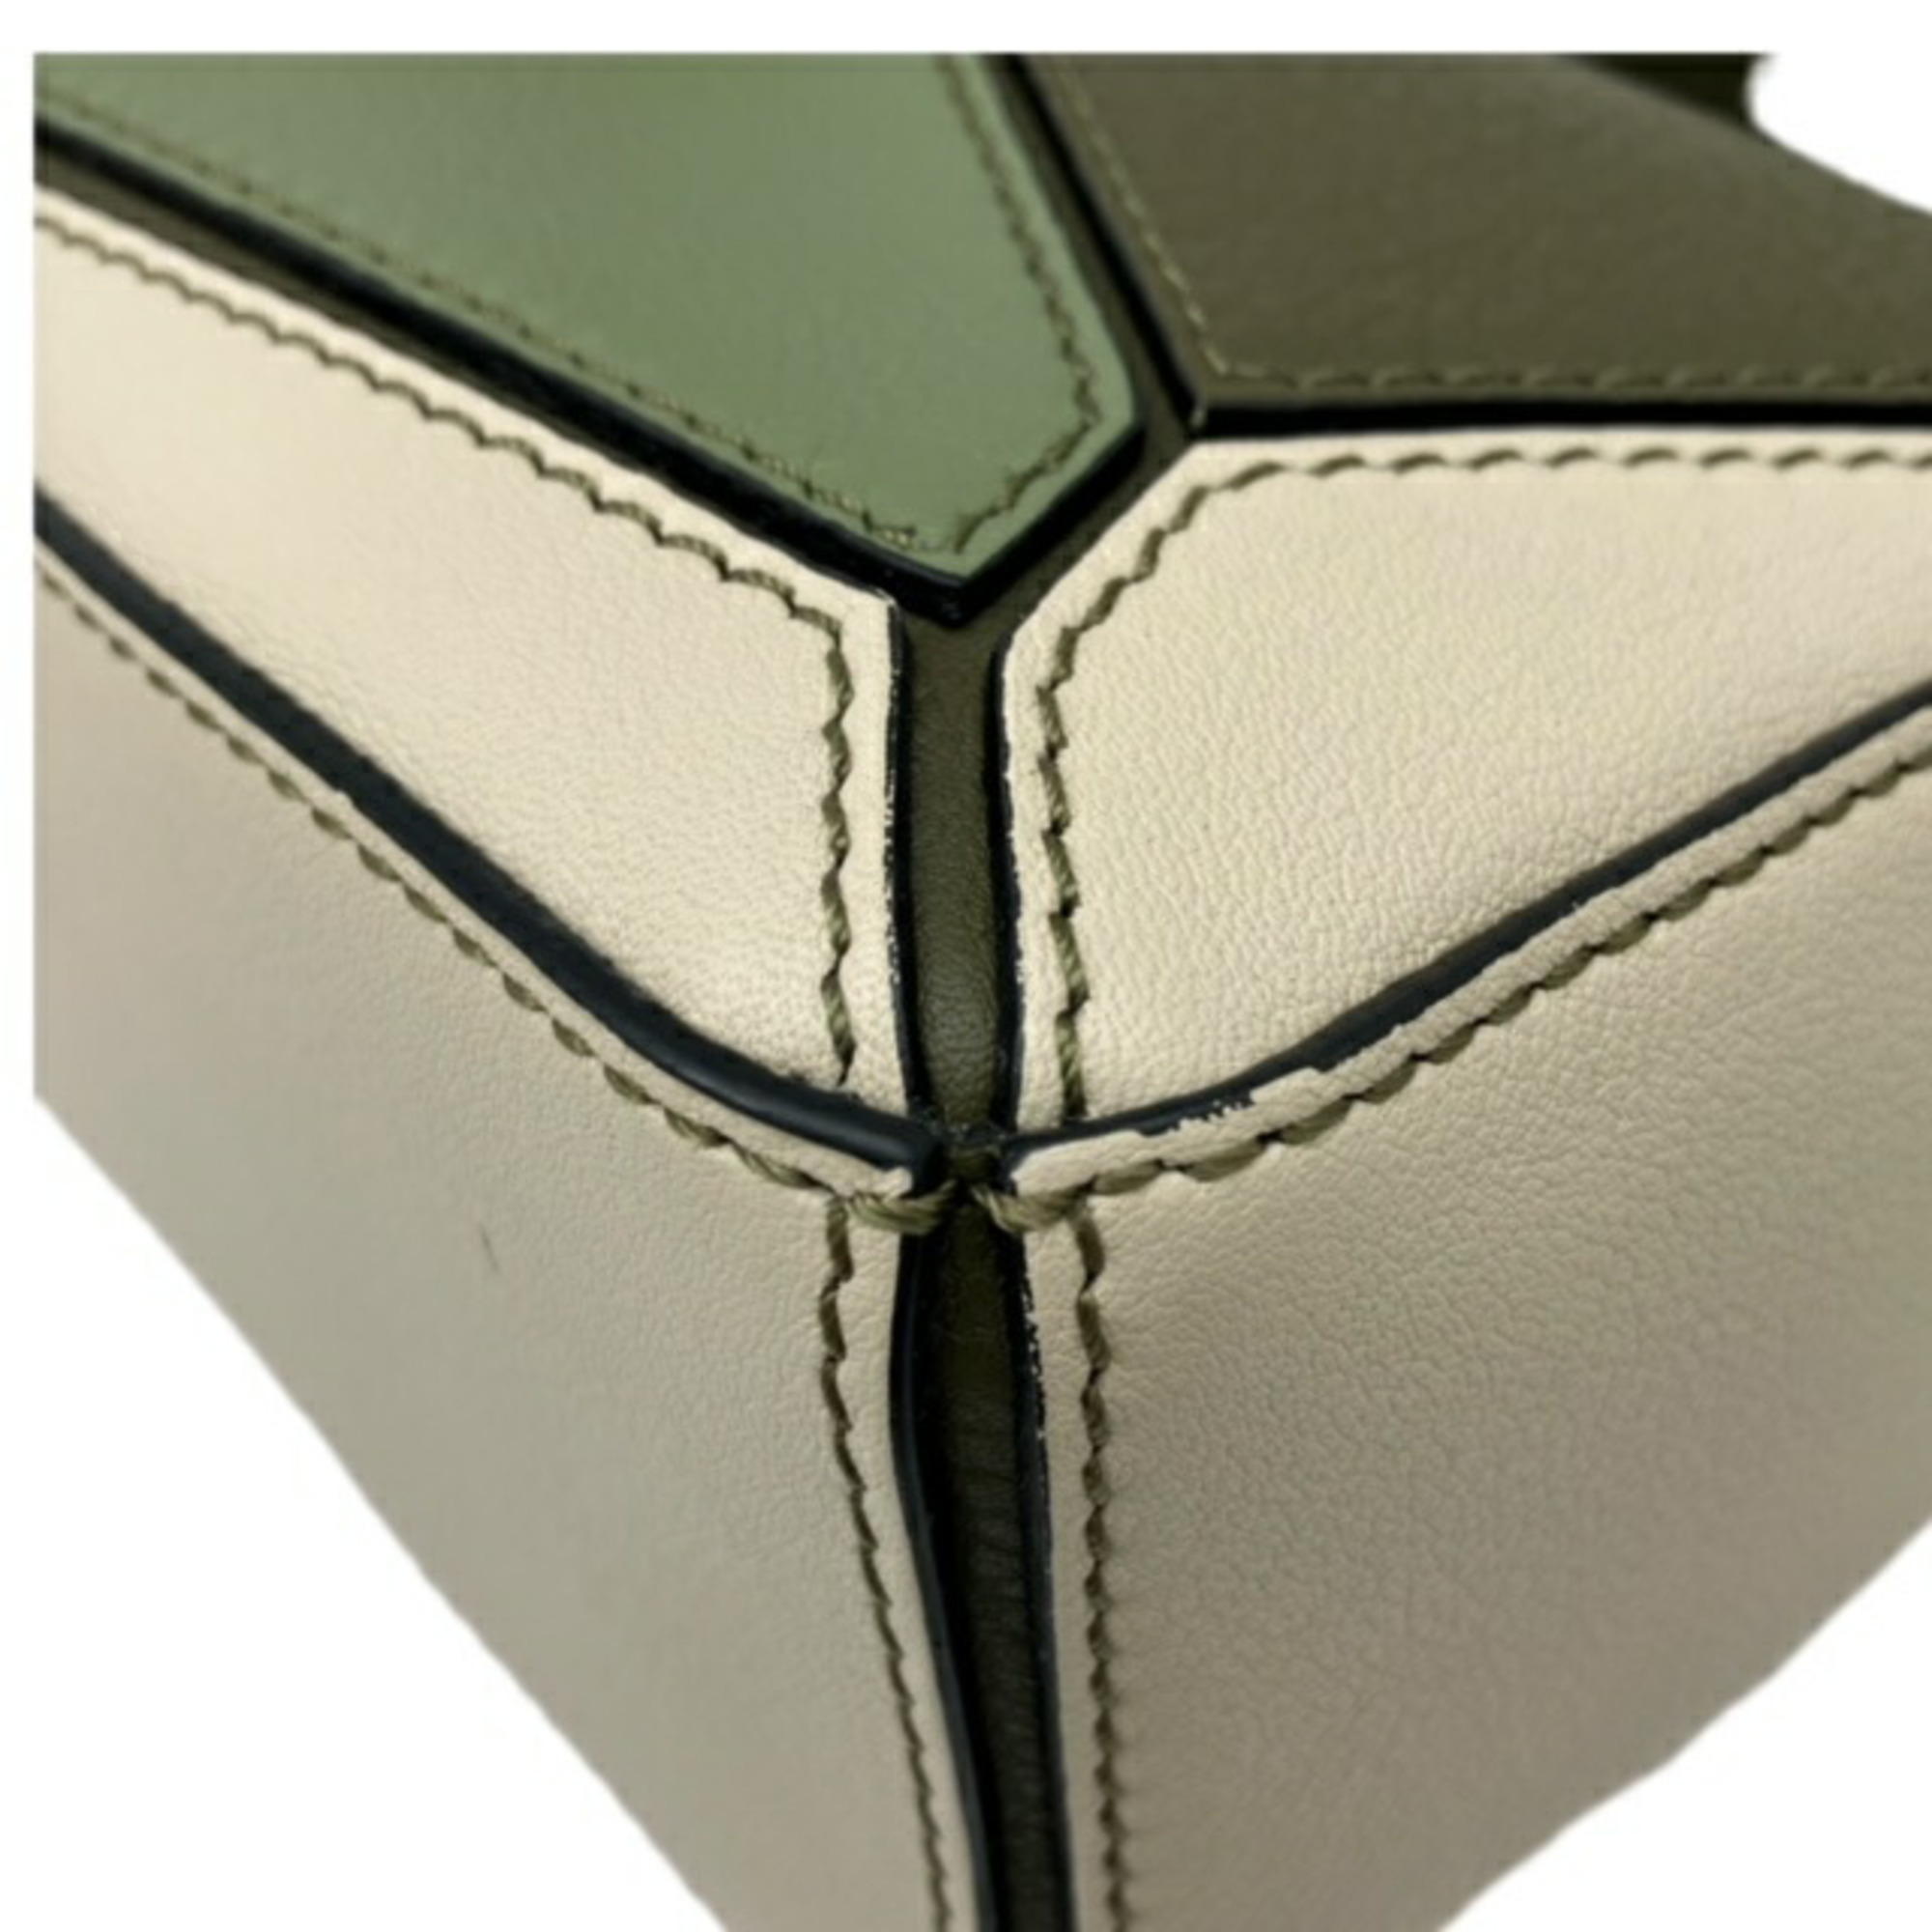 LOEWE Puzzle Bag Handbag Shoulder A510U95 Green Calfskin Leather Women's